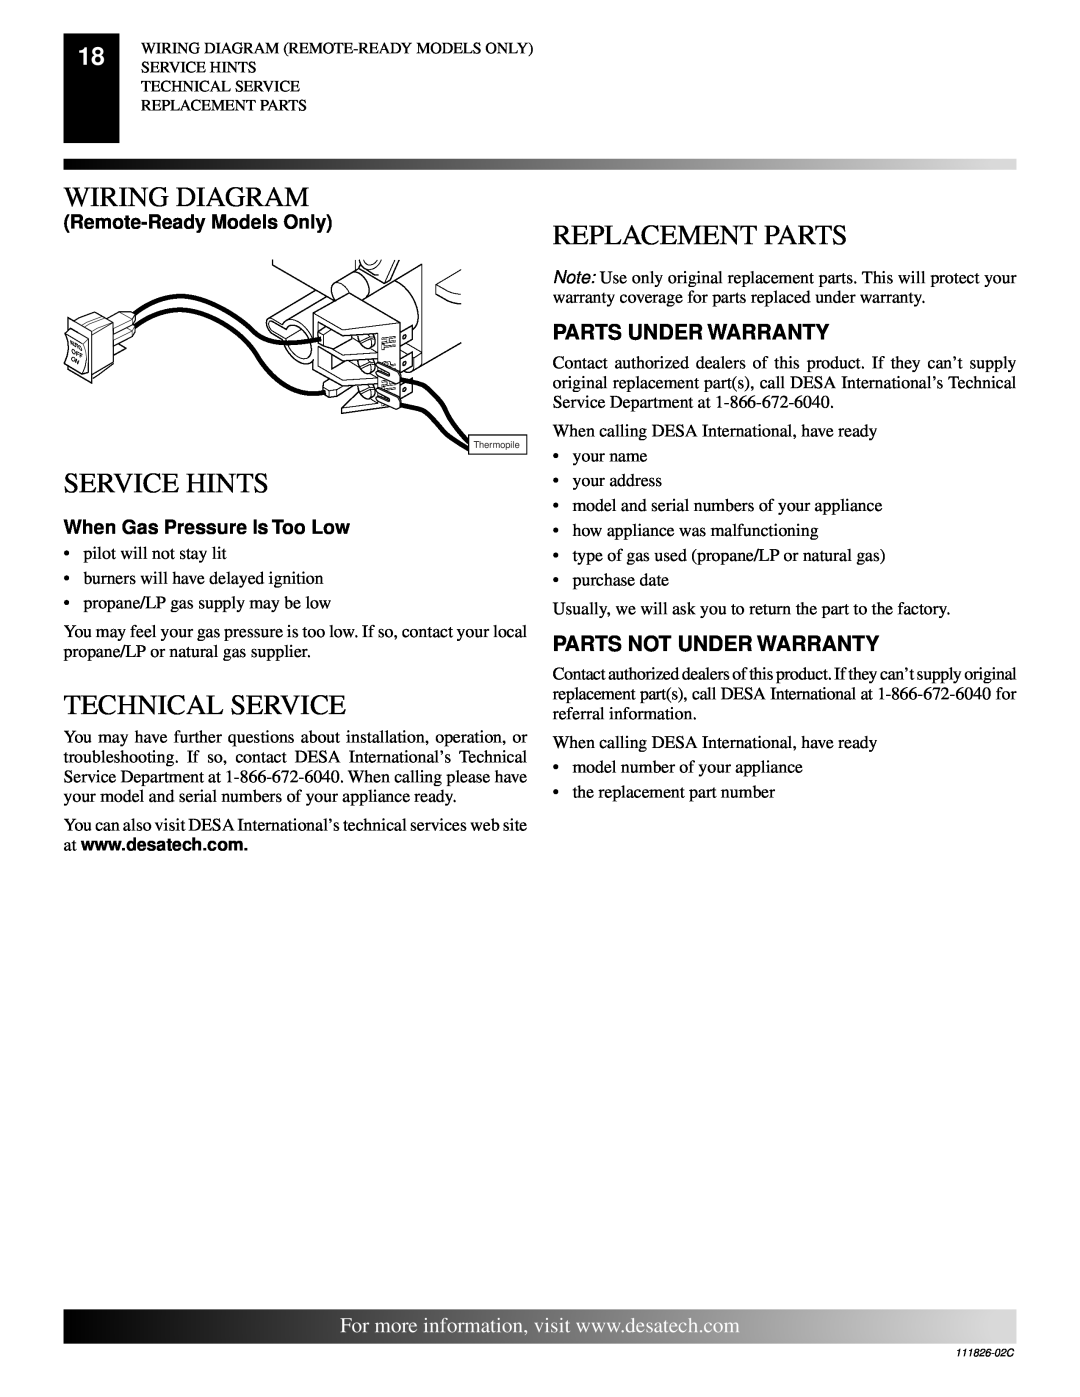 Desa VTD-24N-BTB, VTD-18P-PDG Wiring Diagram, Replacement Parts, Service Hints, Technical Service, Parts Under Warranty 